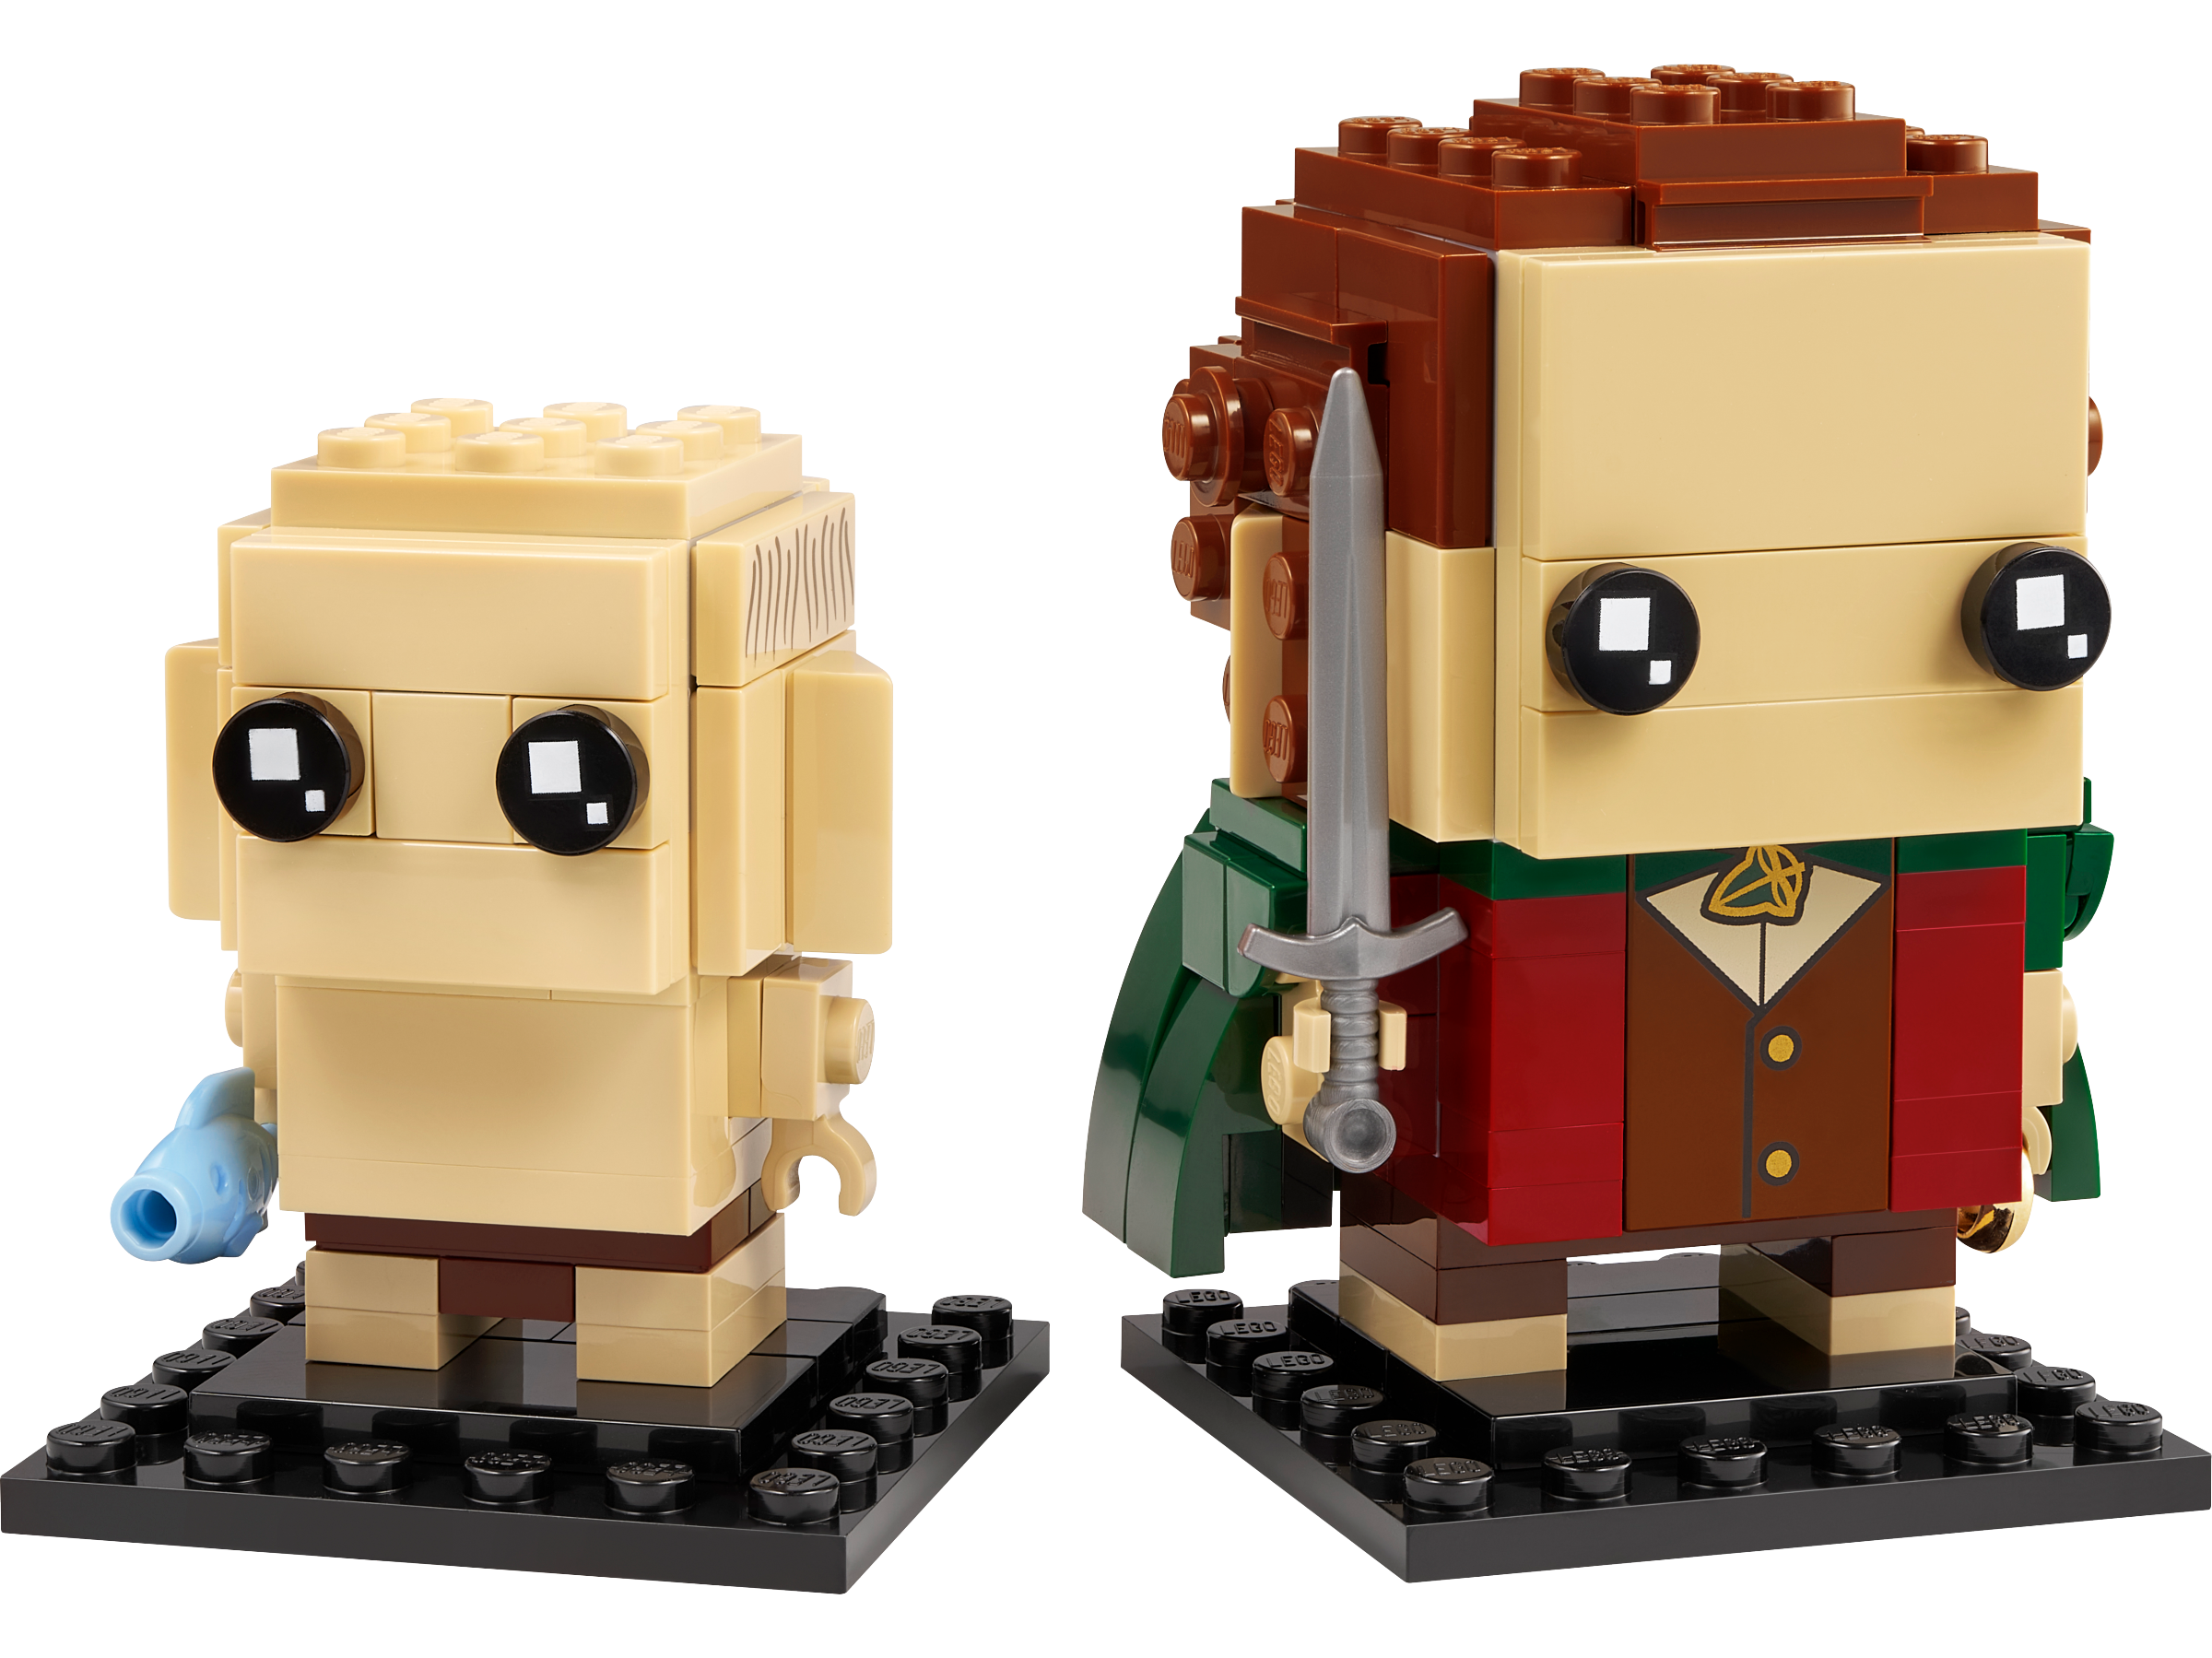 Frodo™ e Gollum™ 40630, BrickHeadz